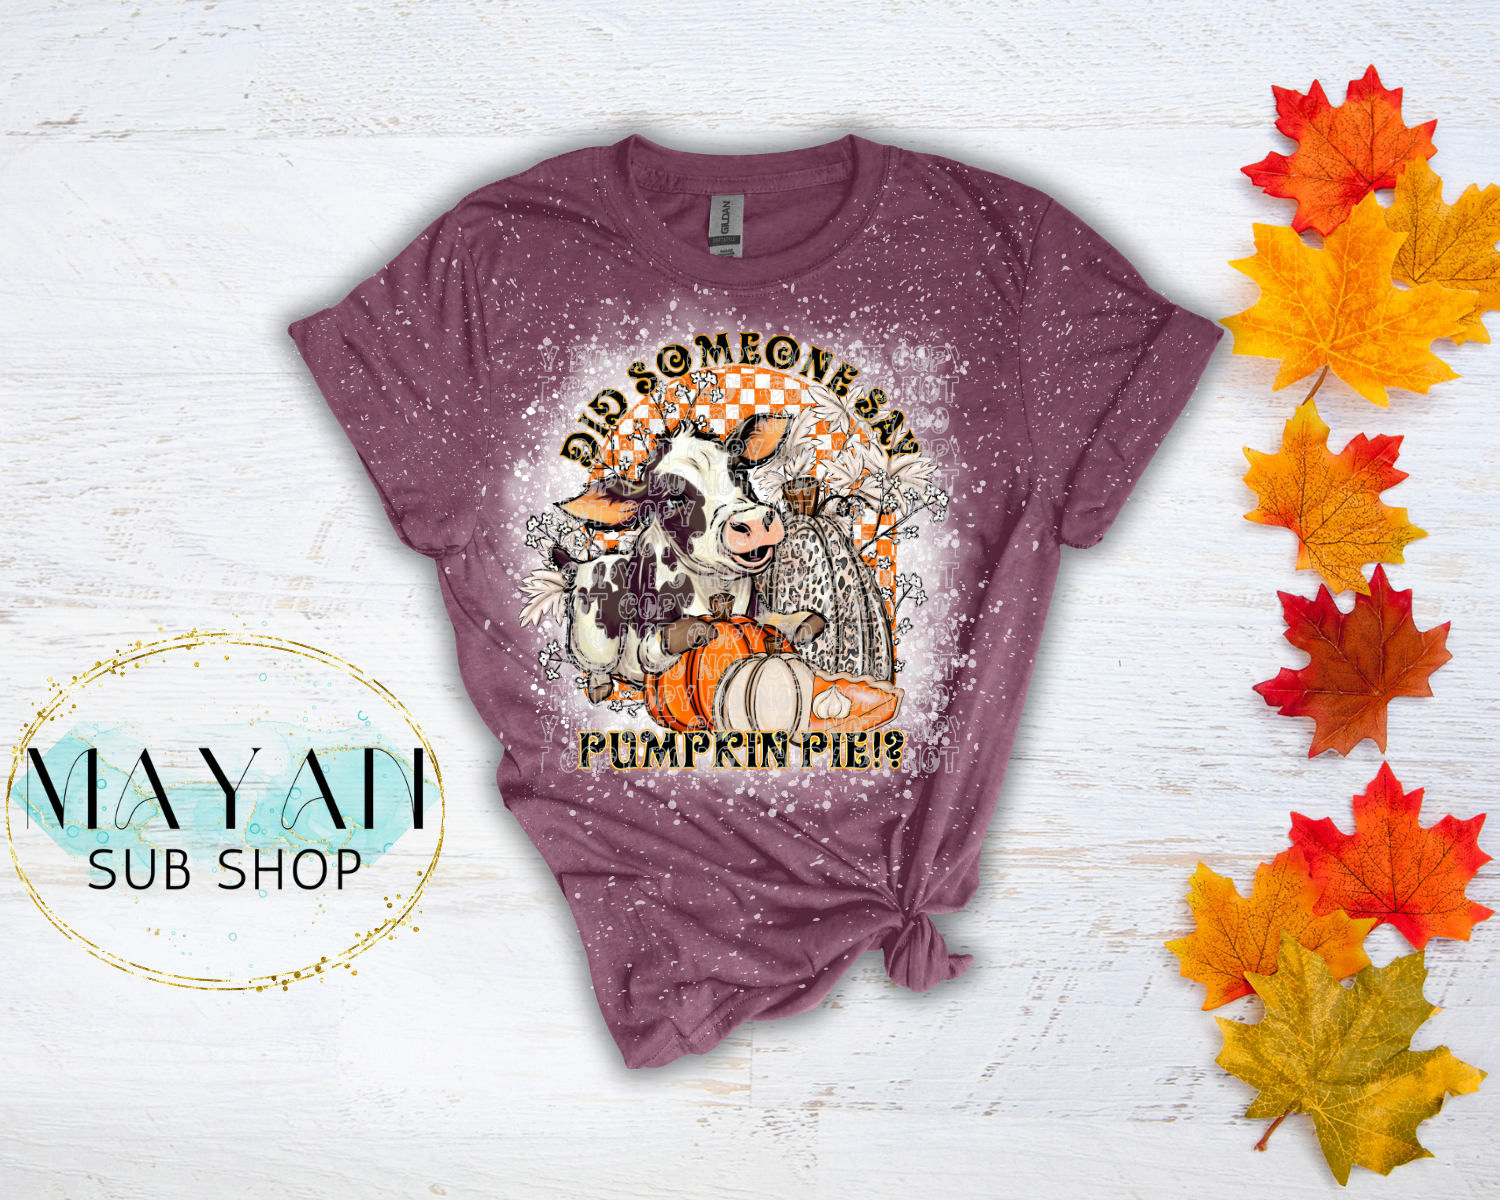 Pumpkin Pie Bleached Shirt - Mayan Sub Shop